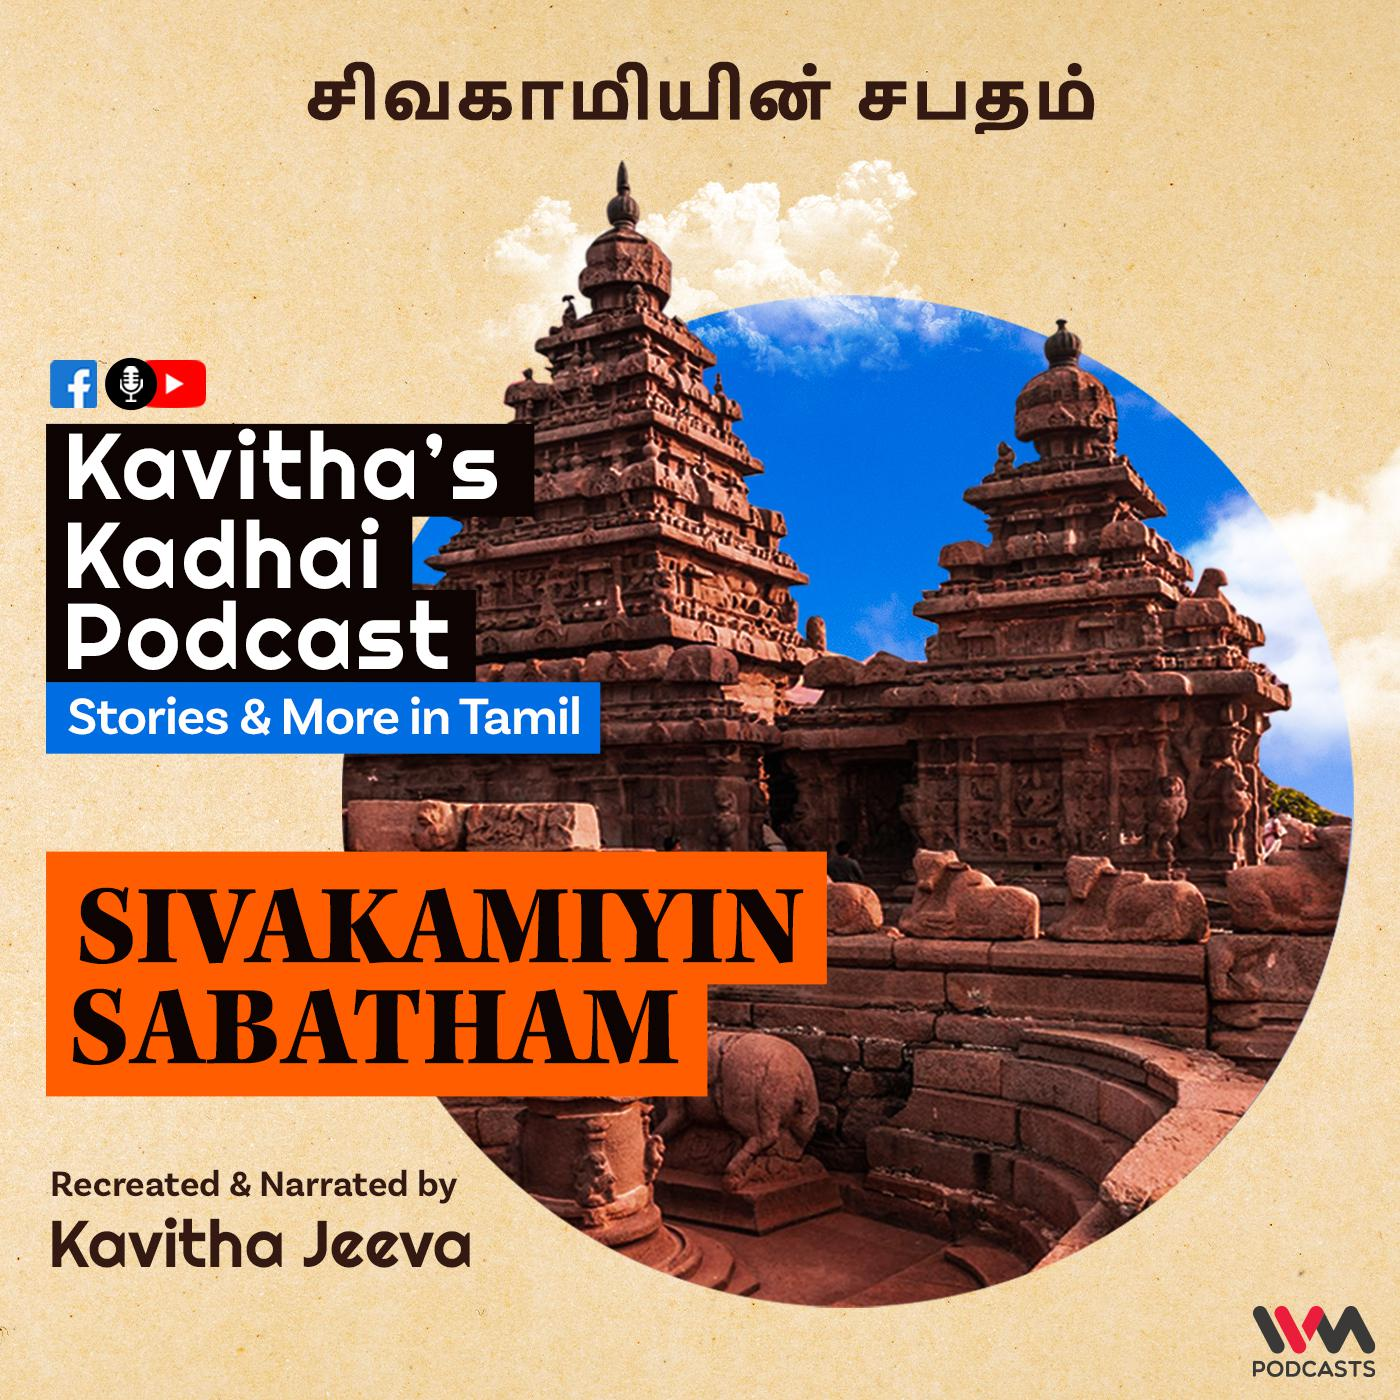 KadhaiPodcast's Sivakamiyin Sabatham with Kavitha Jeeva - Episode #141